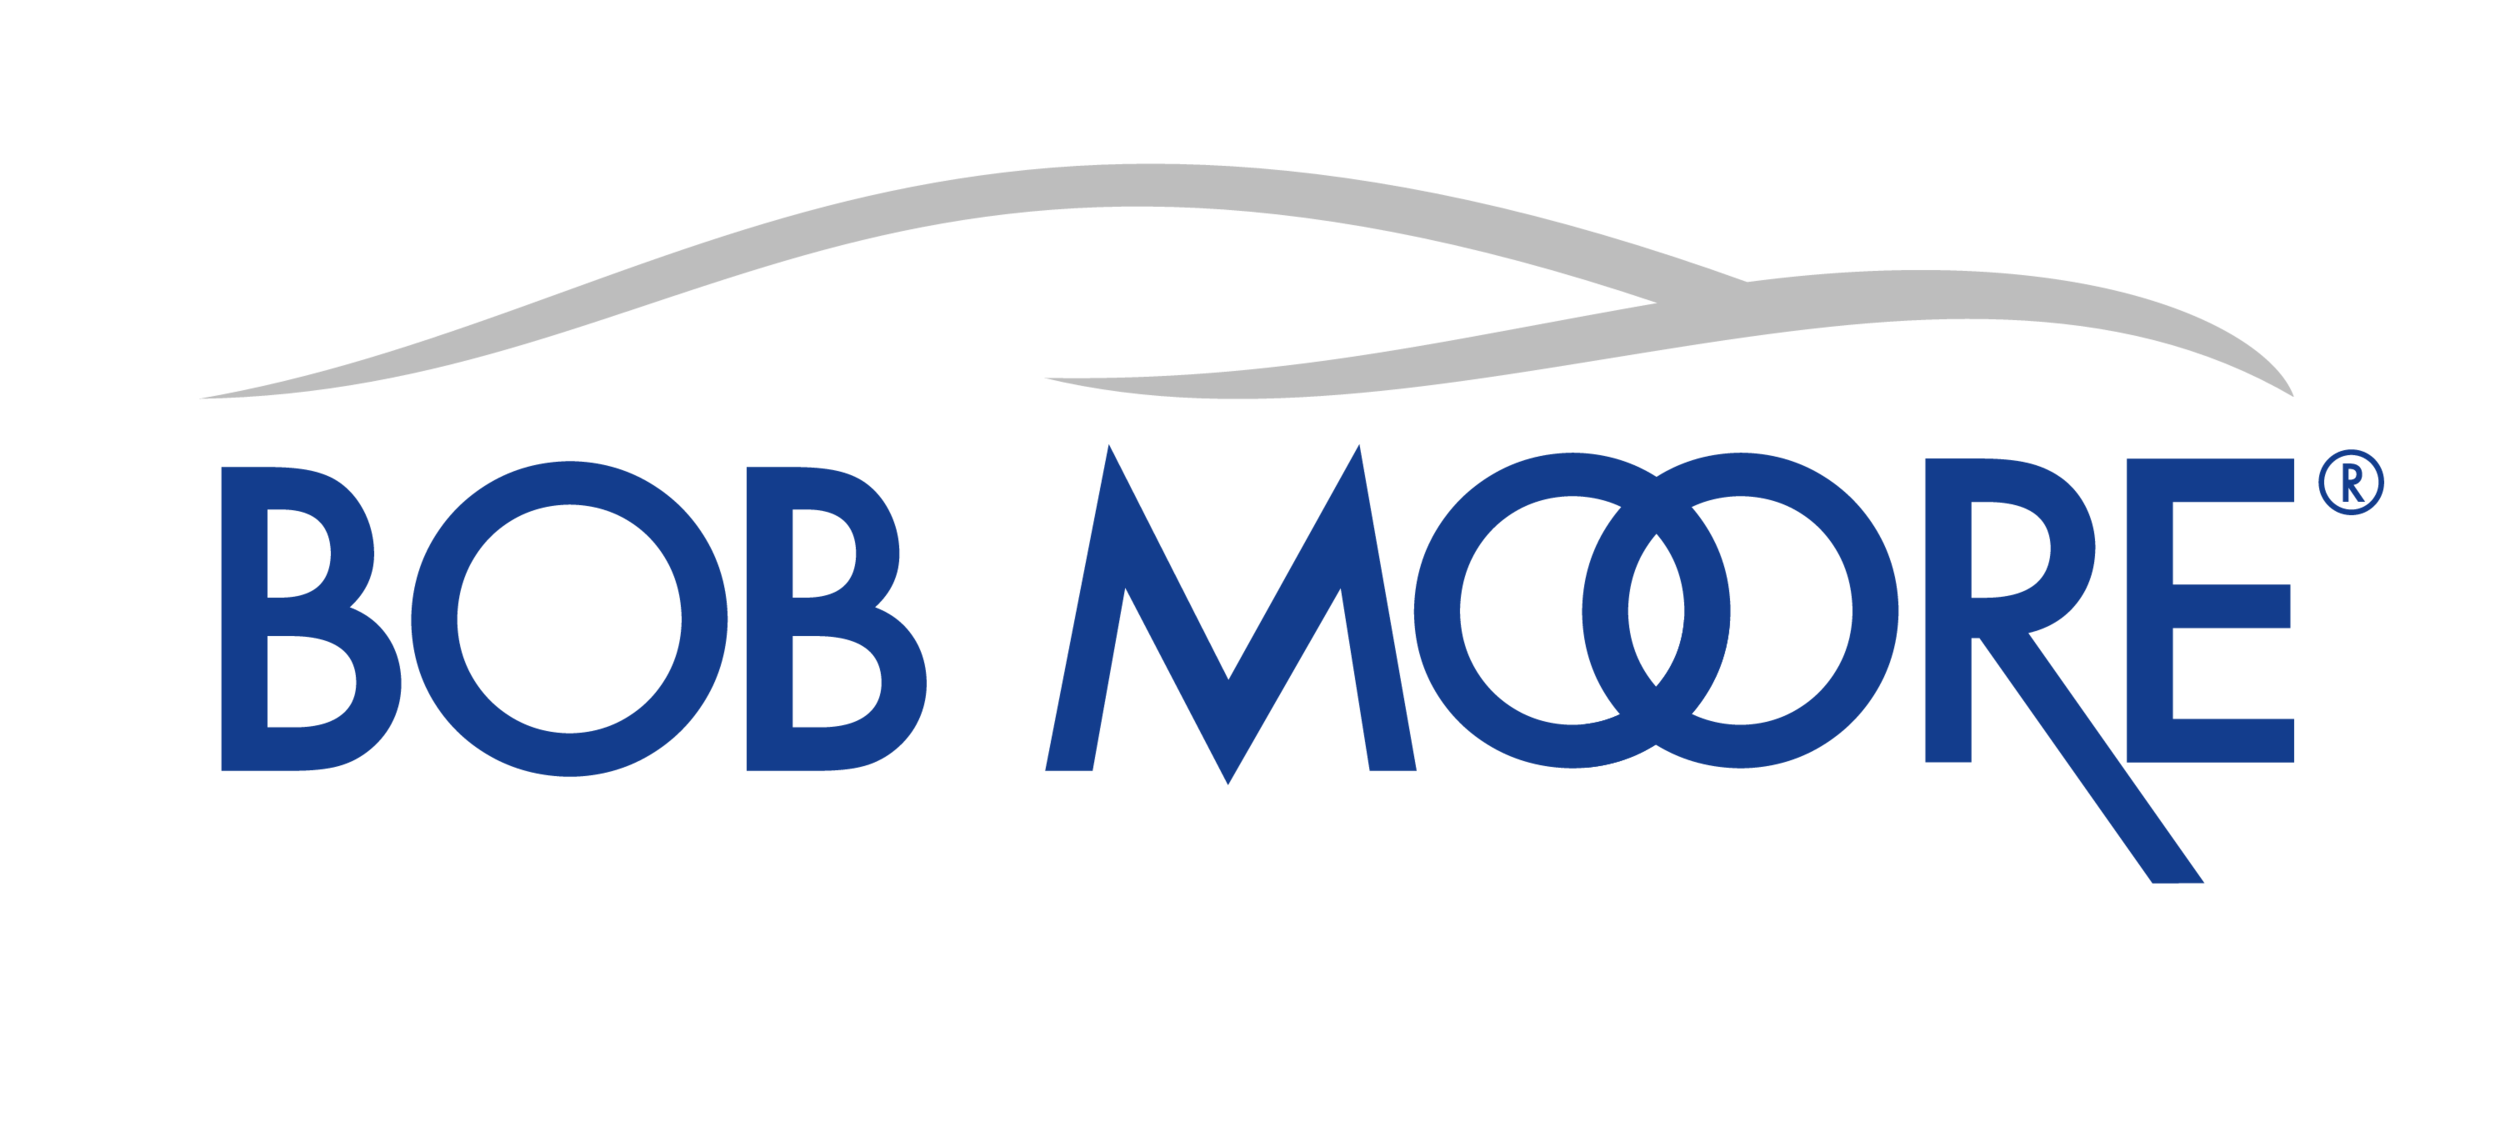 Bob moore ford moore #9